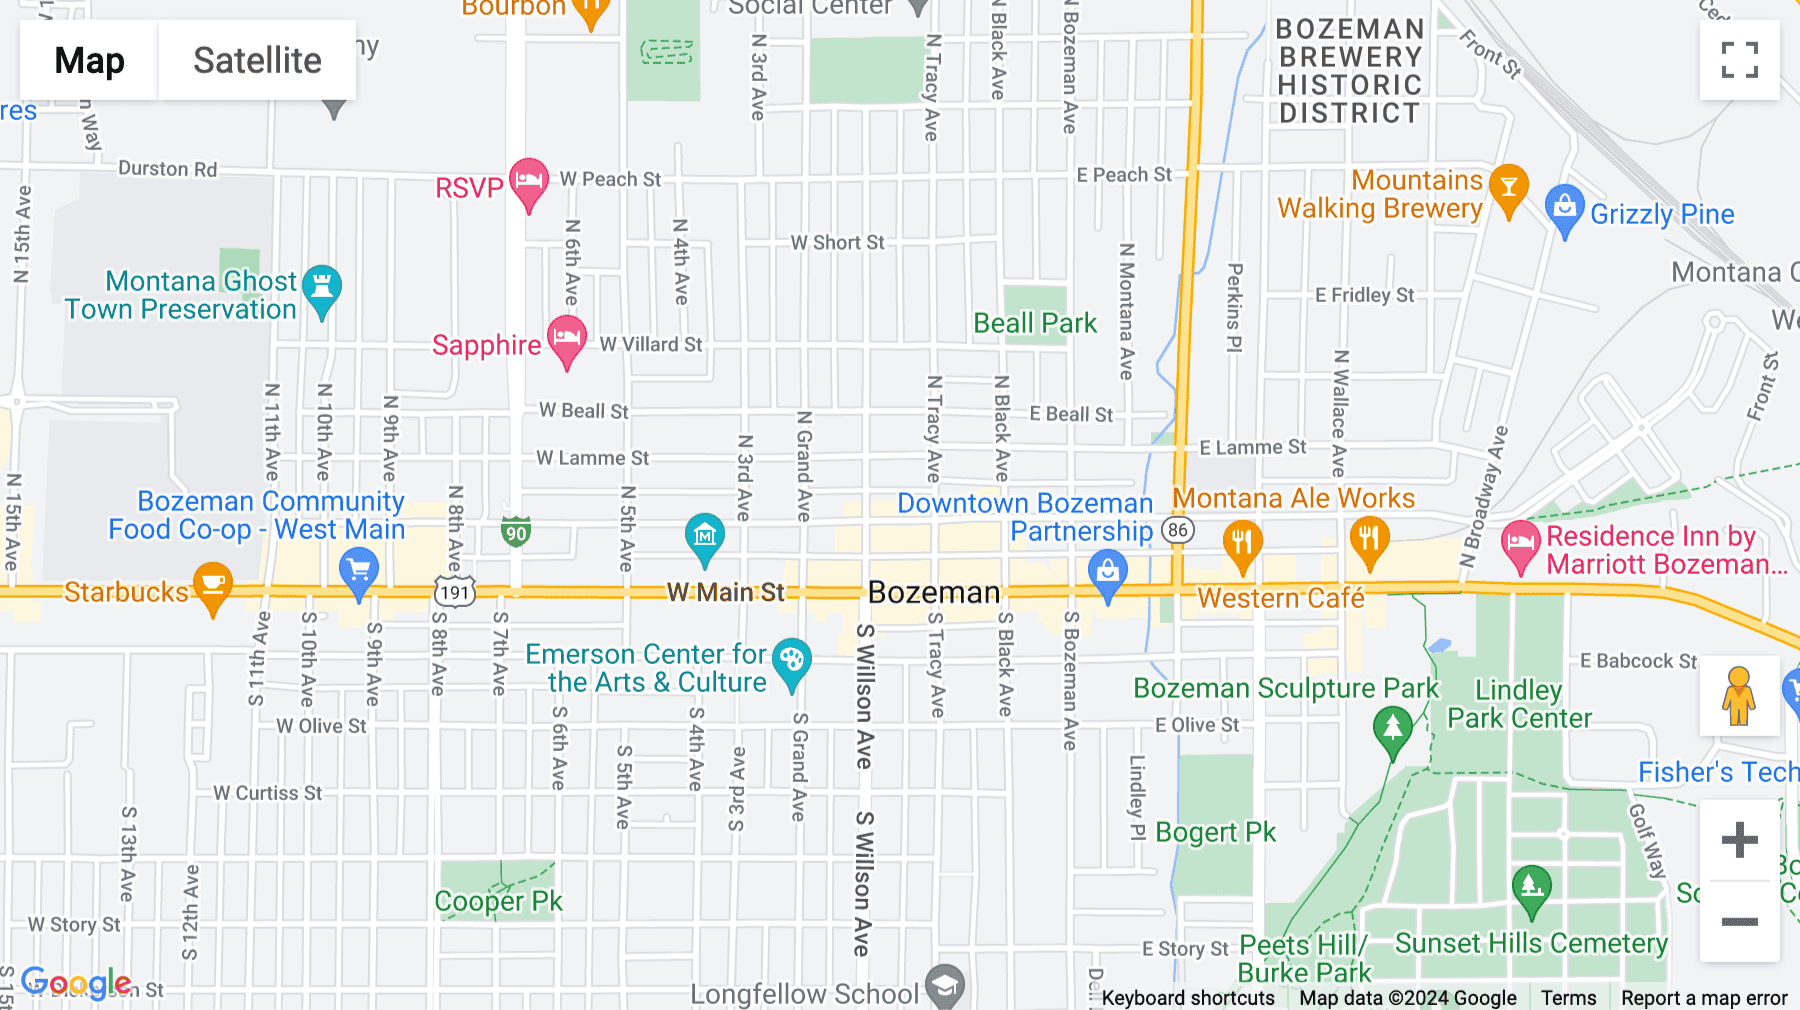 Click for interative map of 5 Mendenhall Street, Suite 200, Downtown Bozeman, Bozeman